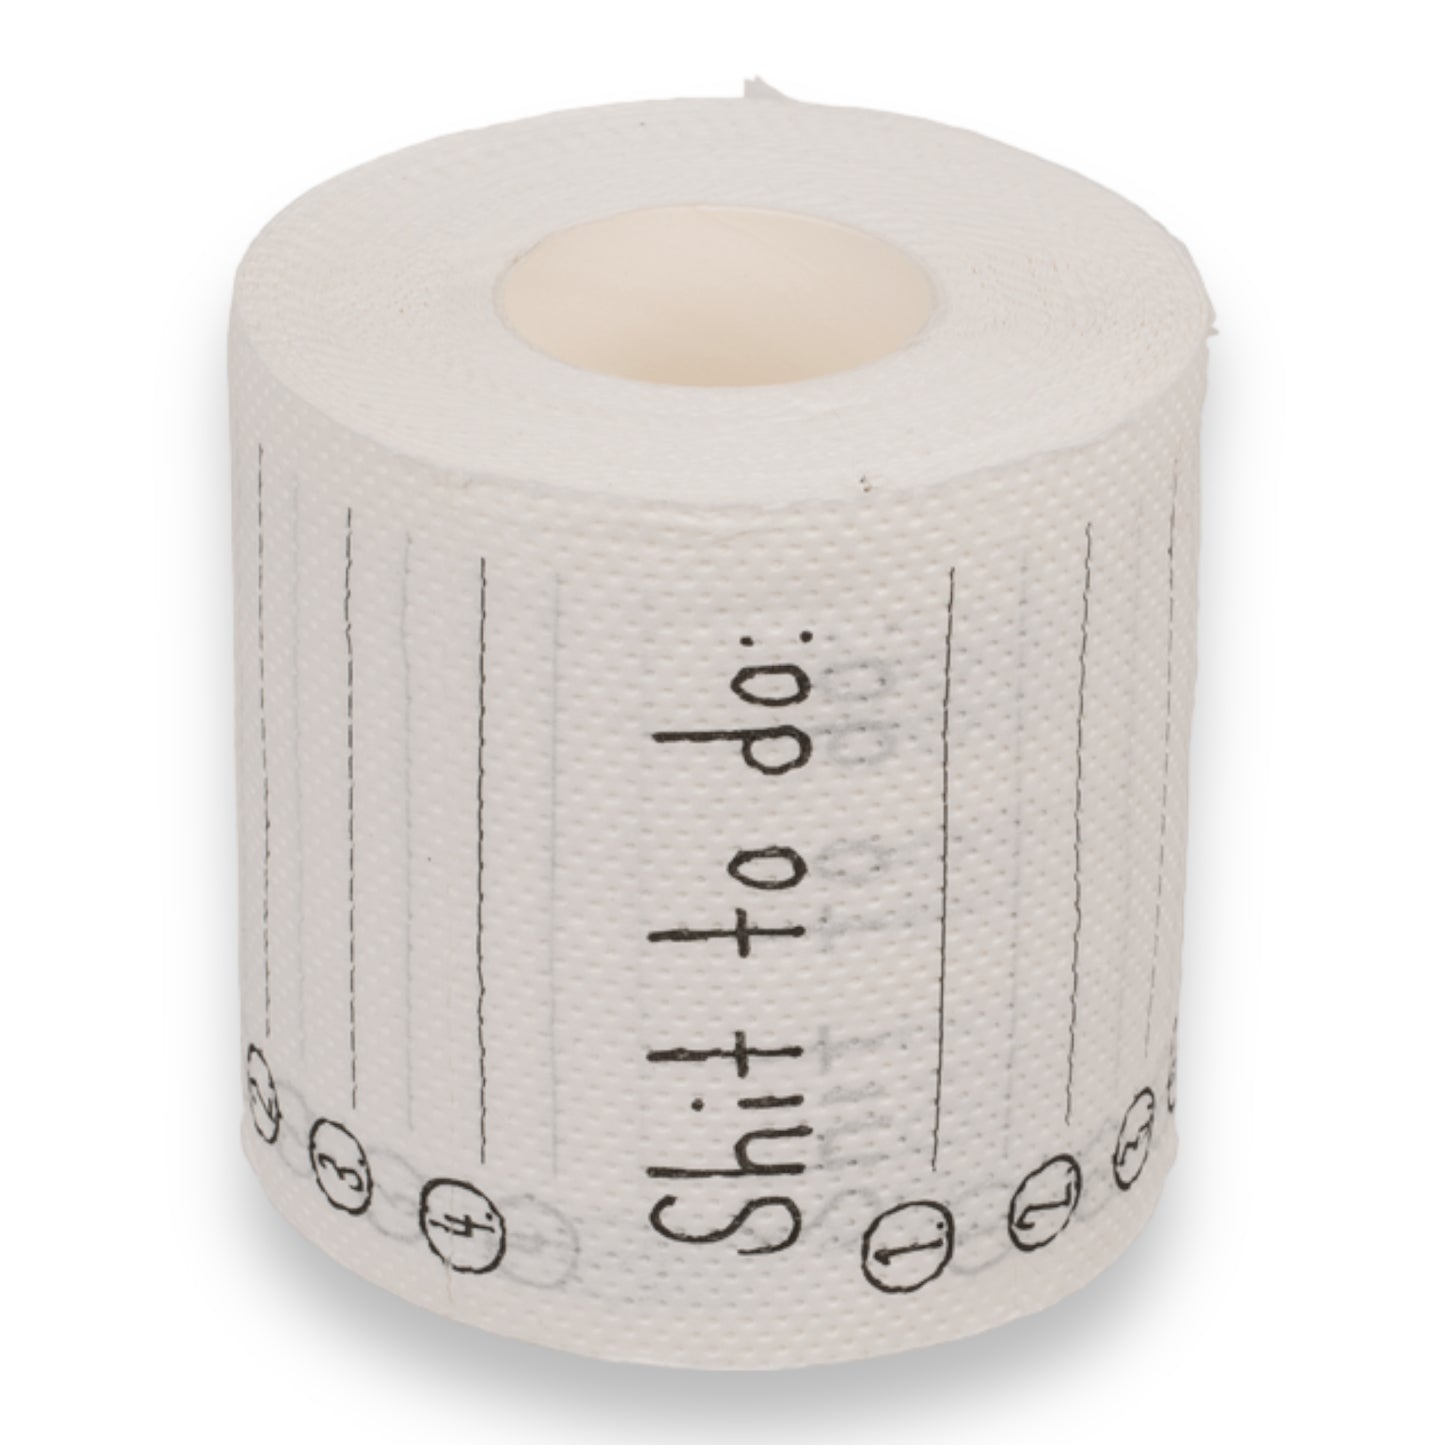 Timmy Toys - B080 - Toilet Paper Roll - Shit To Do - White